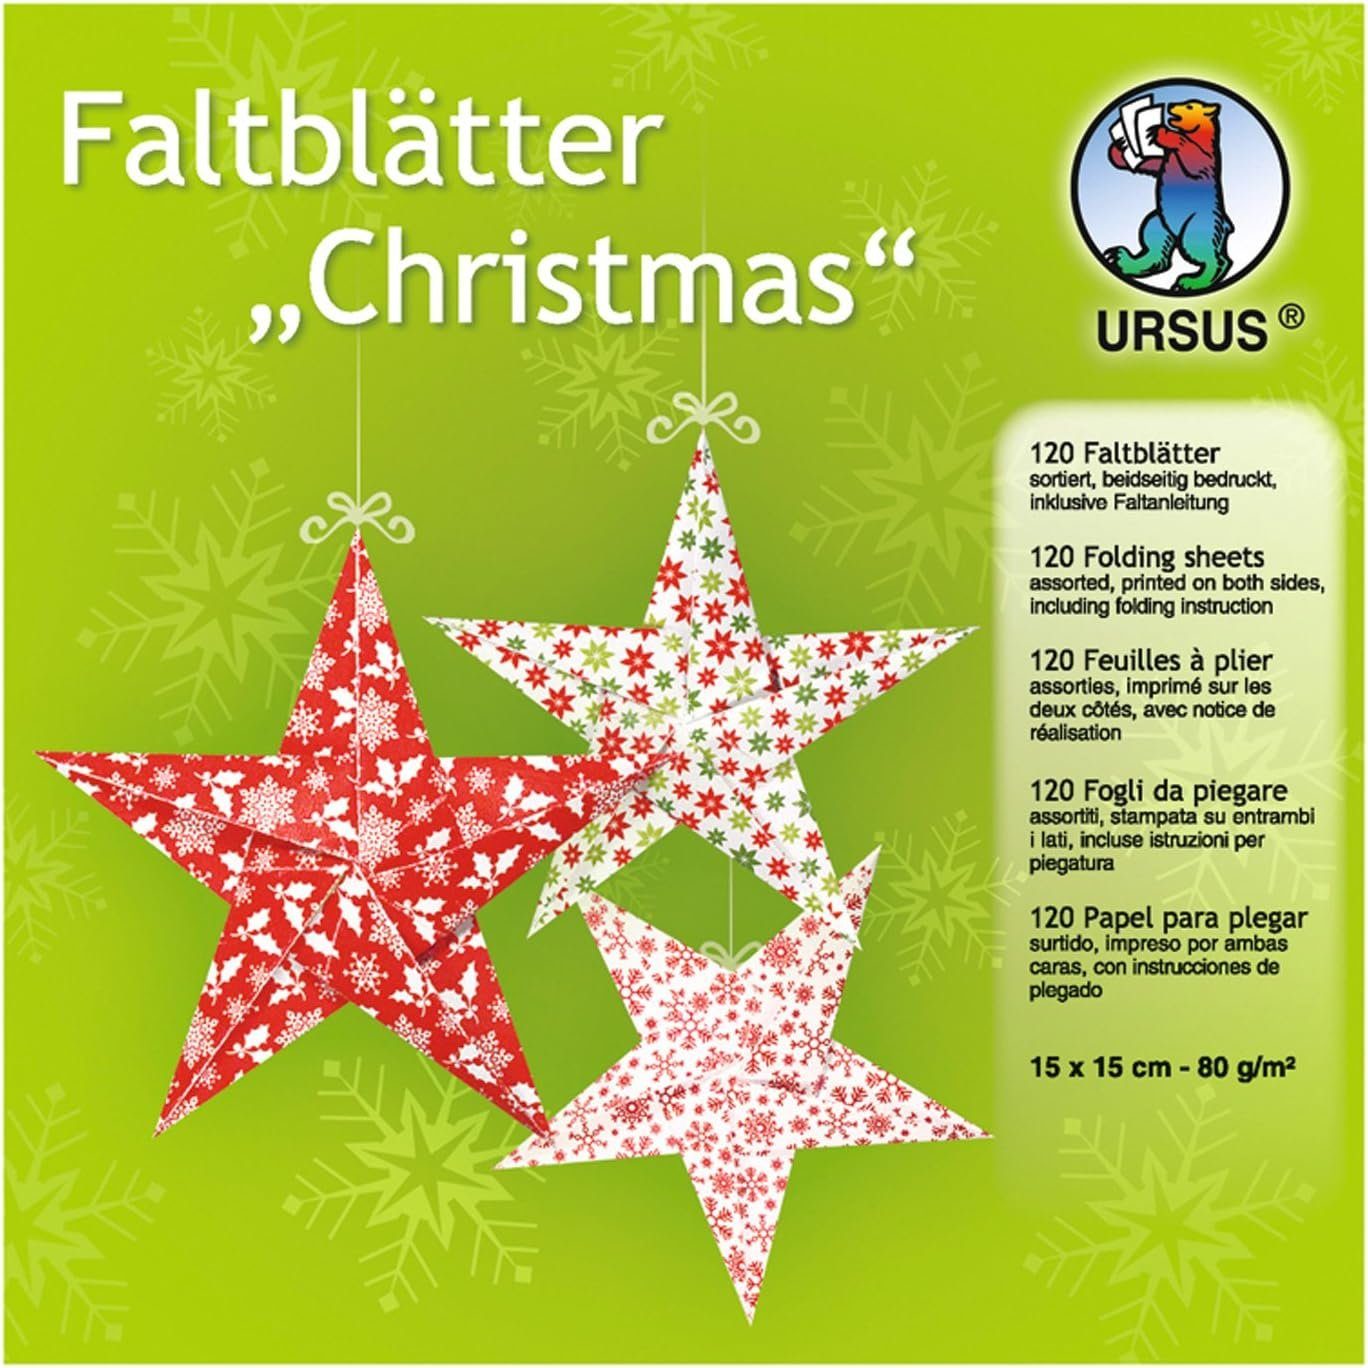 80 g/m² URSUS Christmas - Ludwig Faltblätter Ursus Papiersterne 15x15cm Bähr